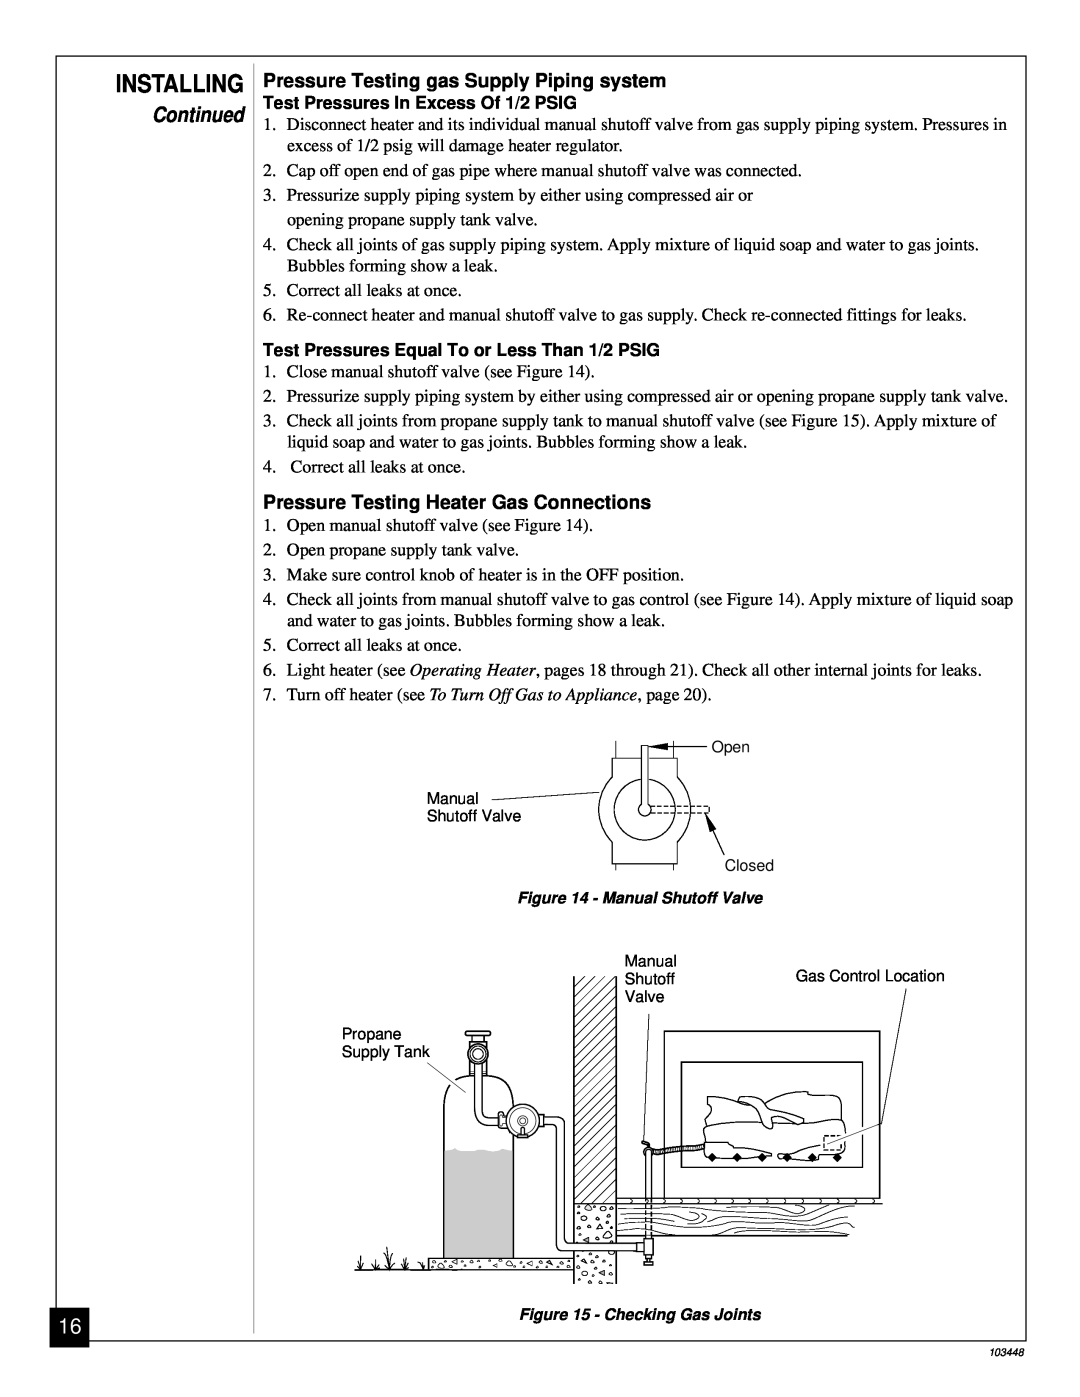 Vanguard Heating VS30PR Pressure Testing gas Supply Piping system, Pressure Testing Heater Gas Connections, Installing 